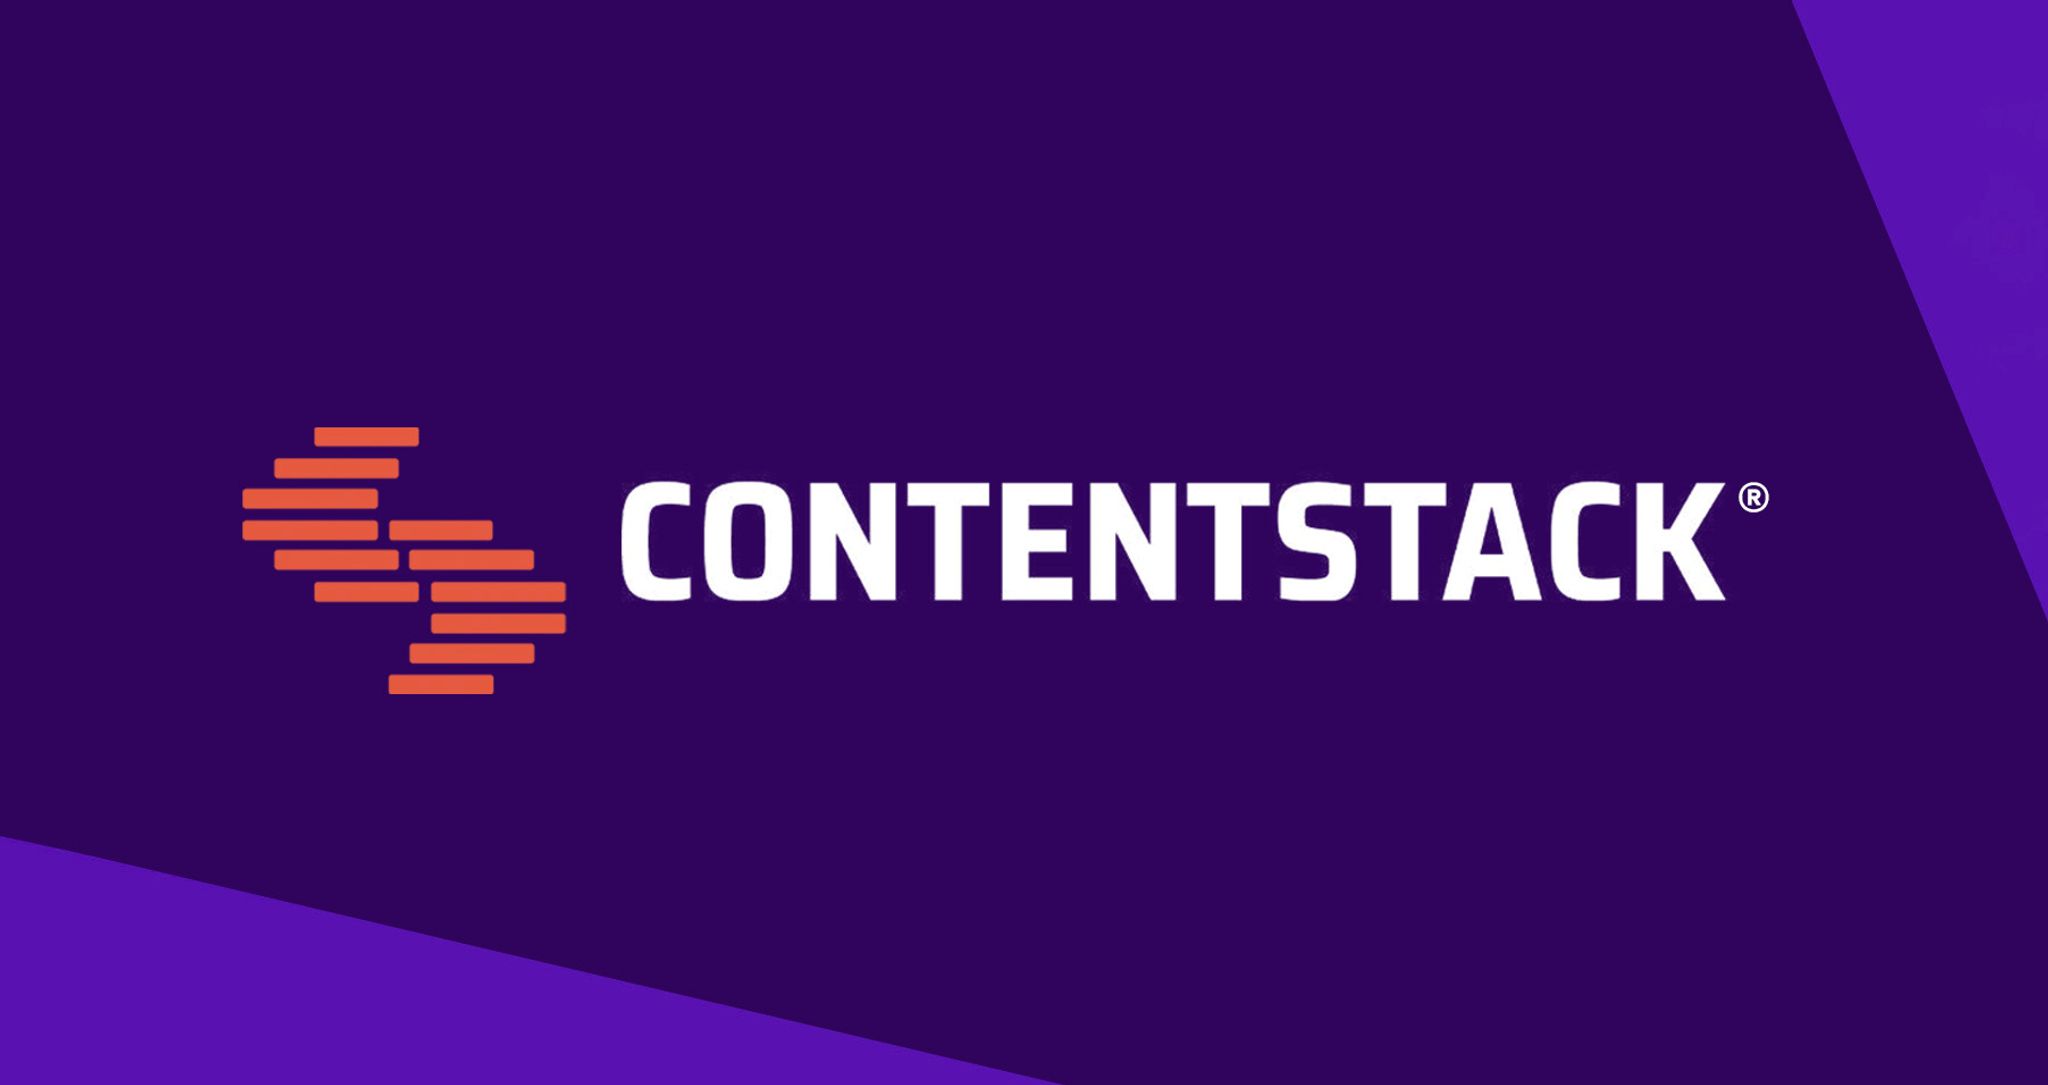 Contentstack logo against purple background